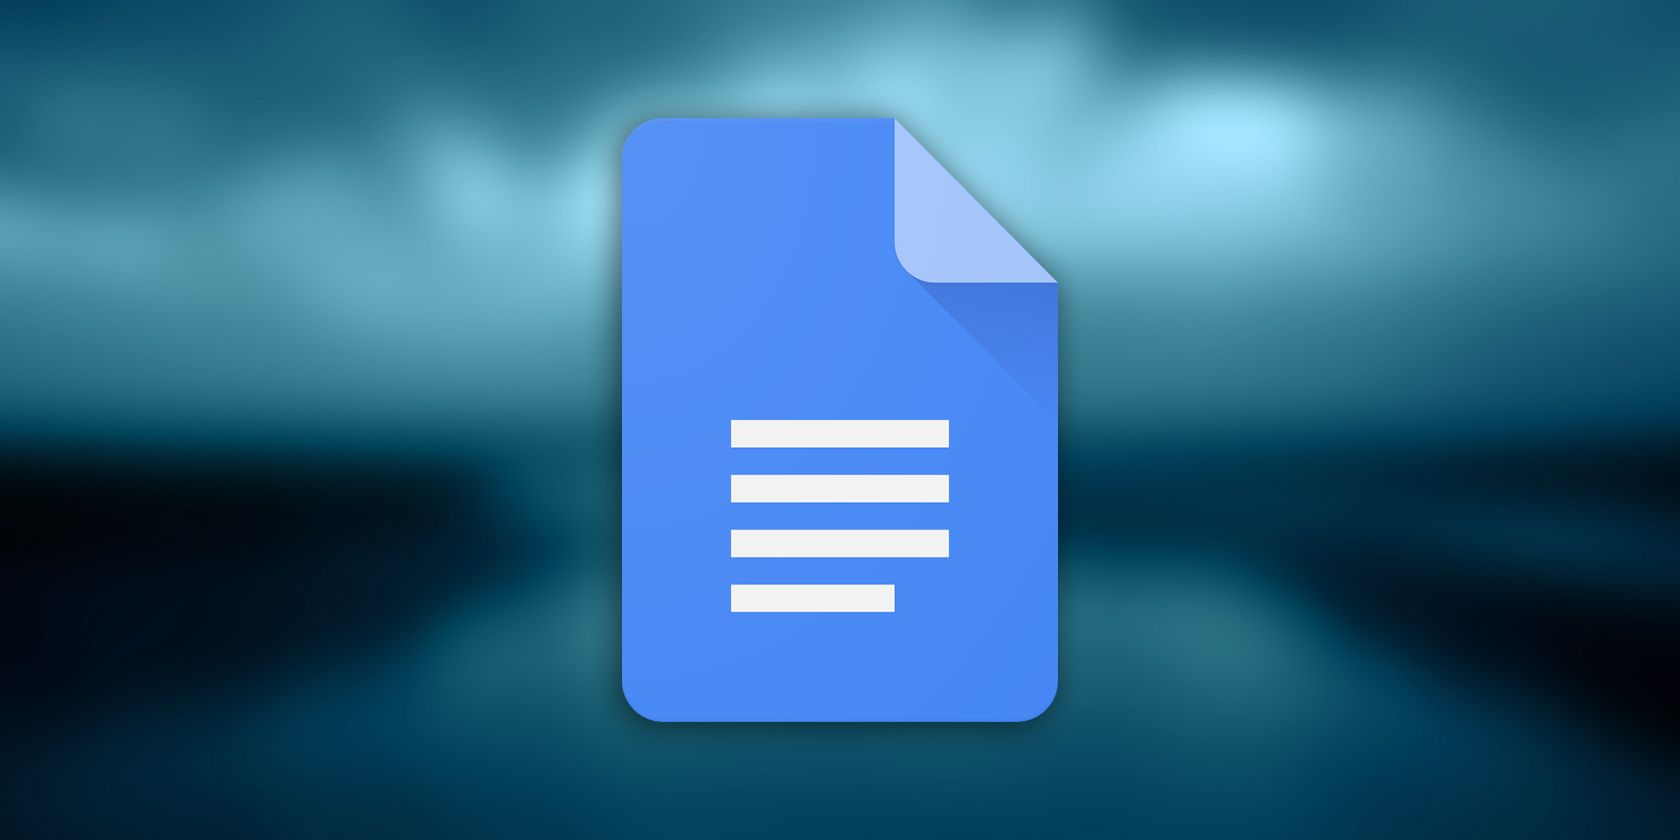 Google Docs logo on a blue background.